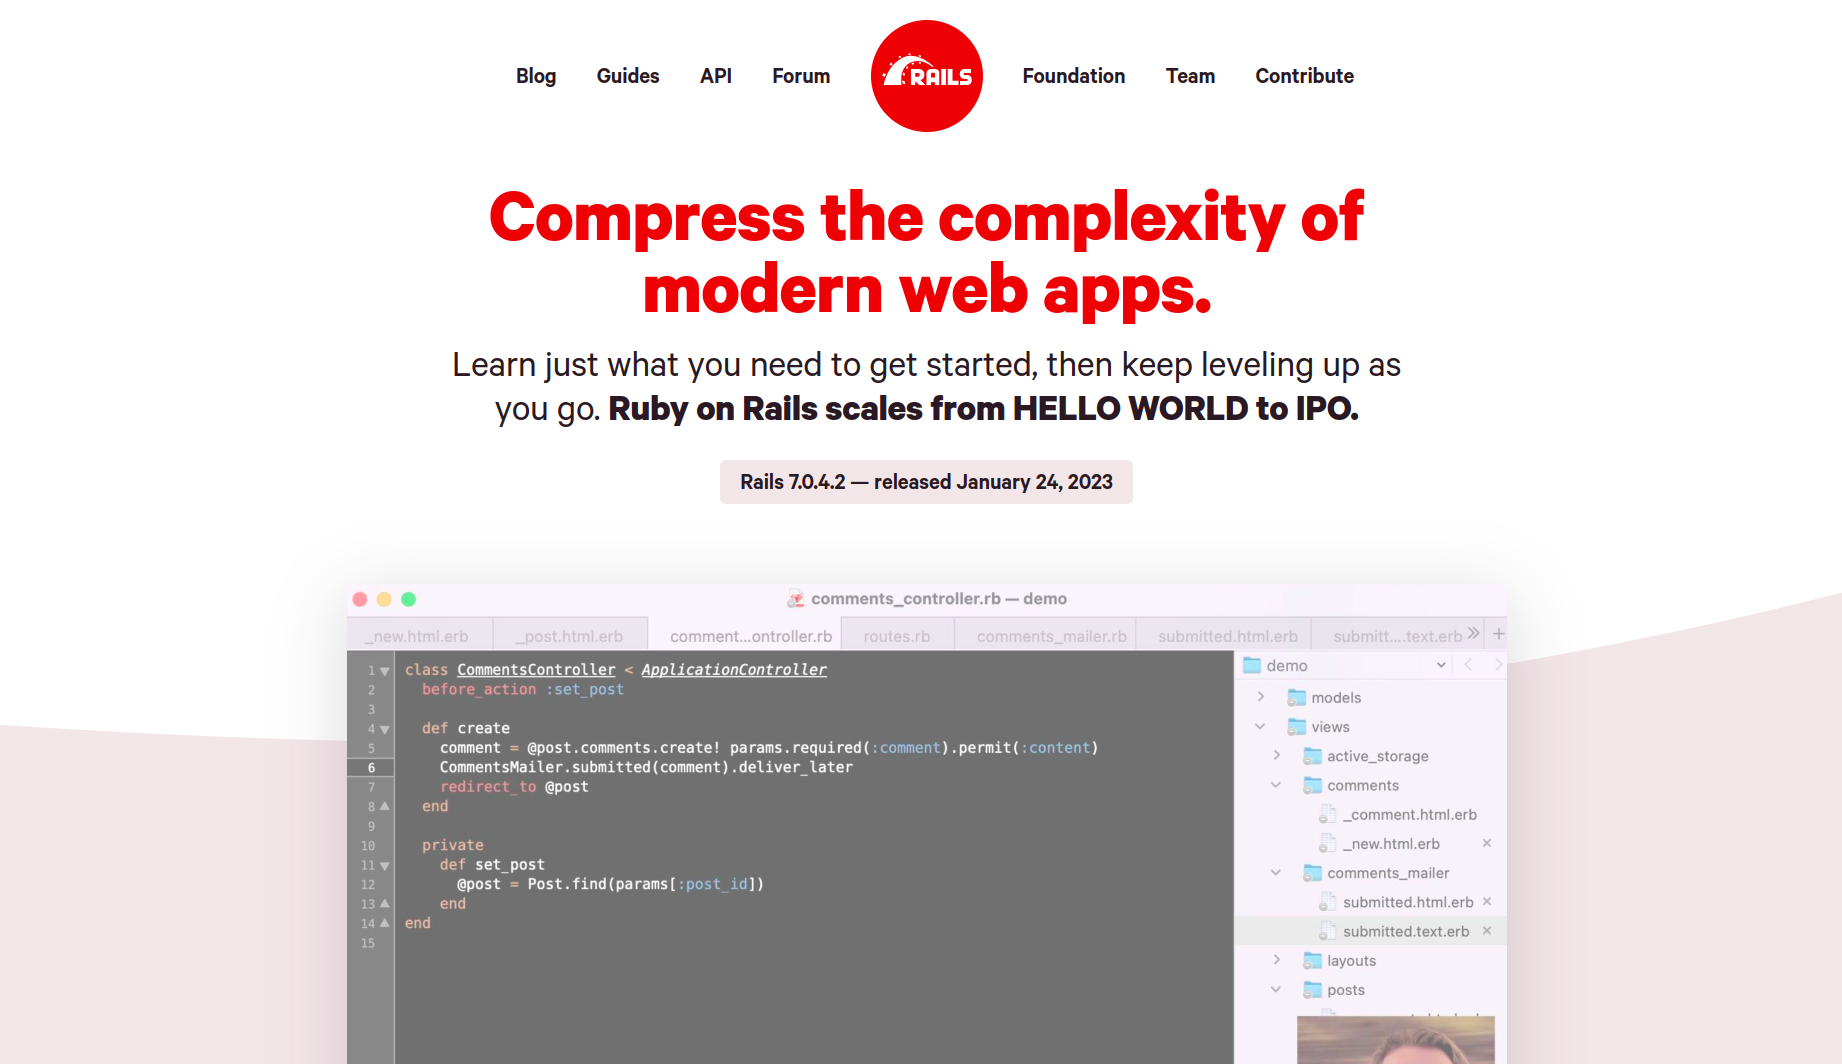 Ruby on Rails: The Innovative Framework for Web Development